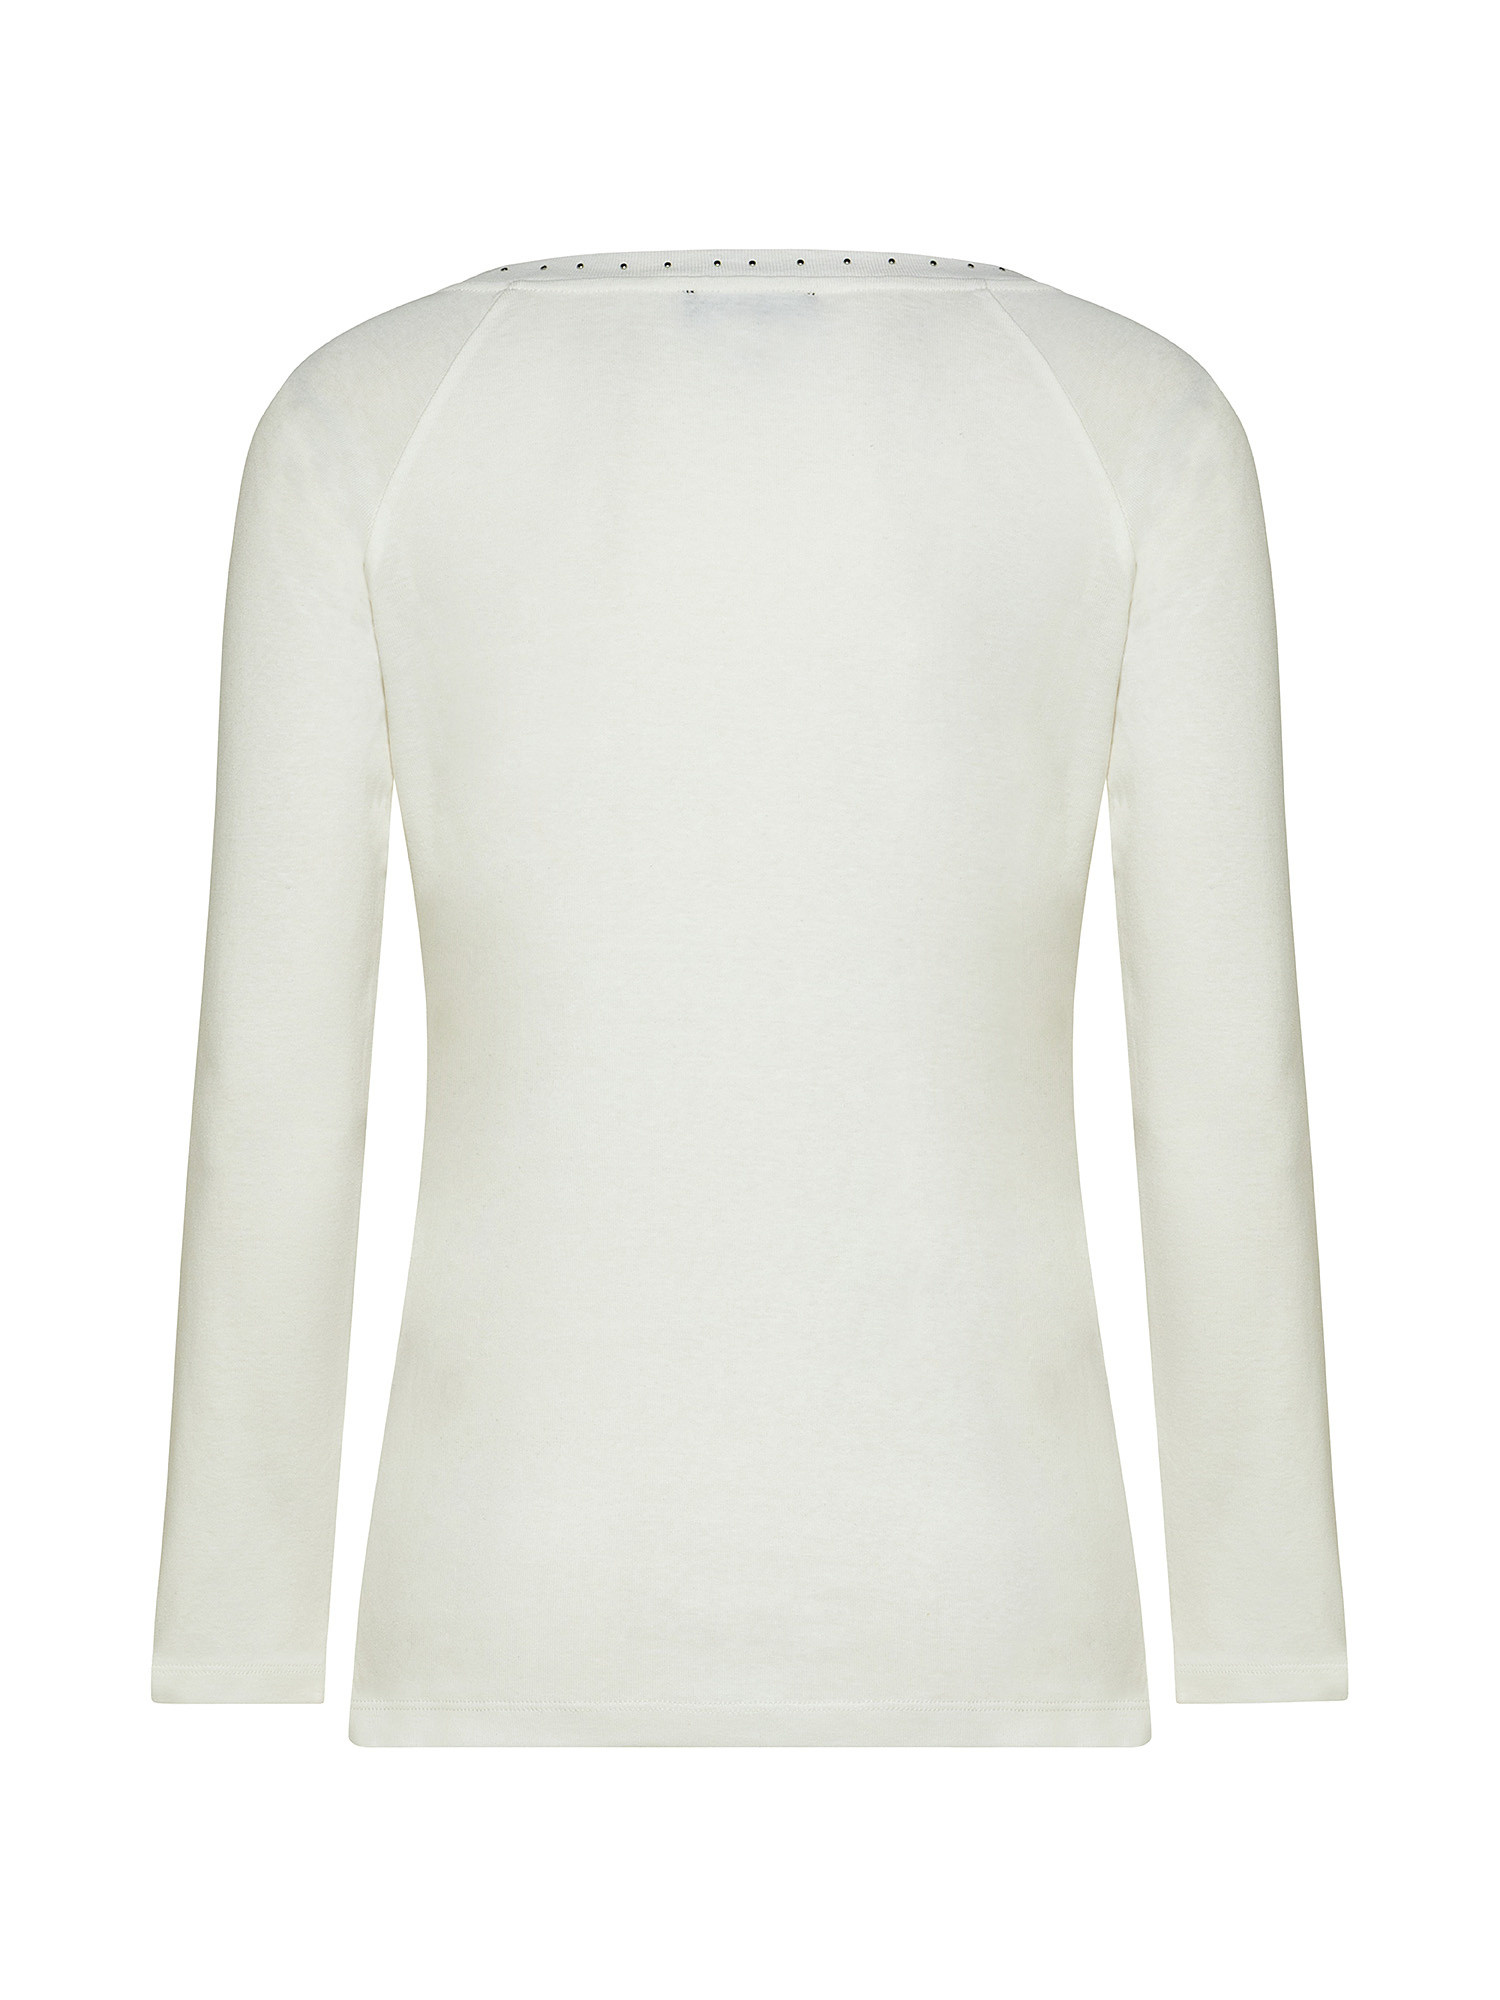 T-shirt con borchie, Bianco, large image number 1